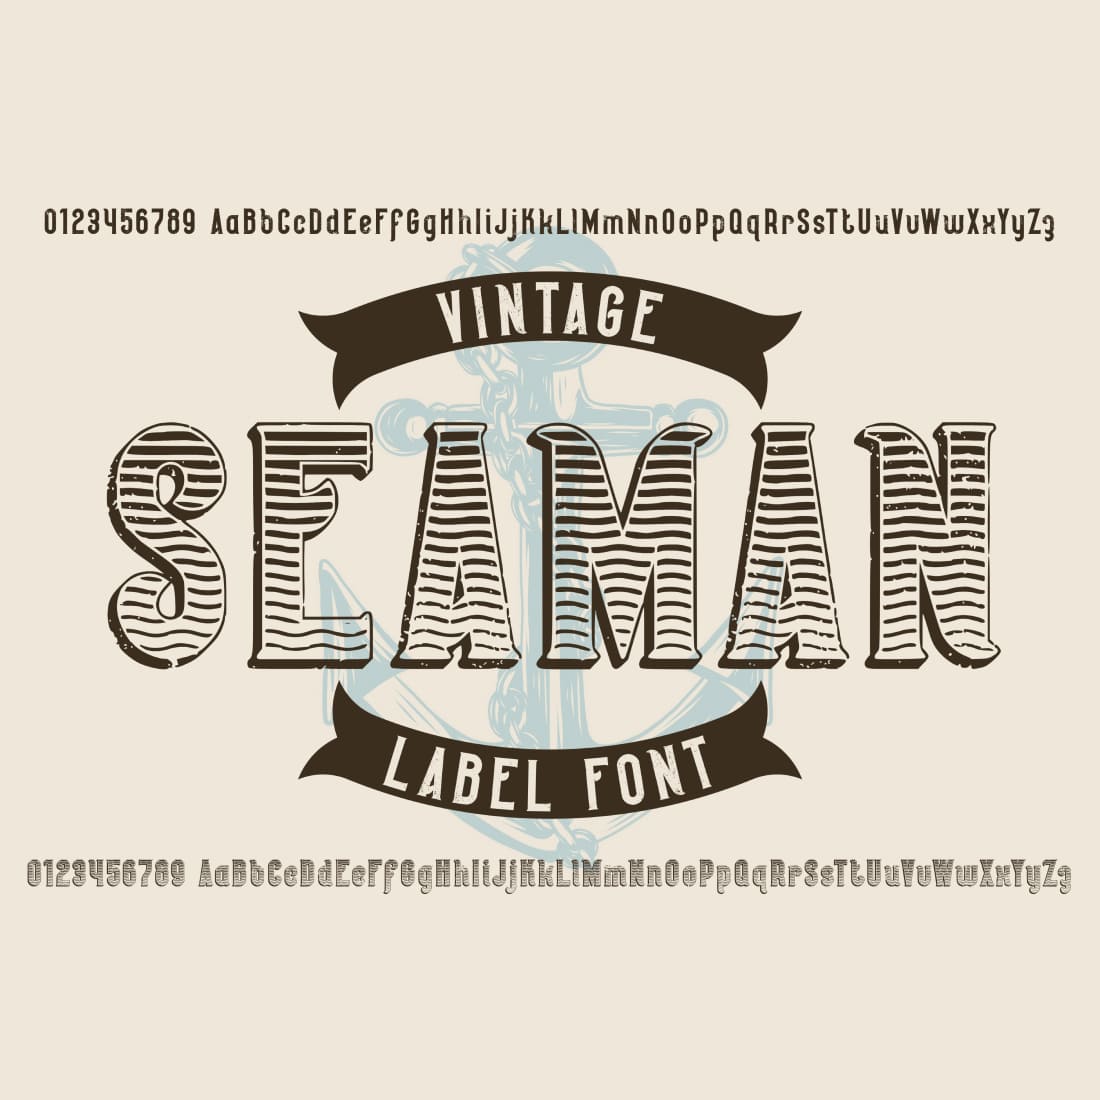 Seaman Label Font main cover.